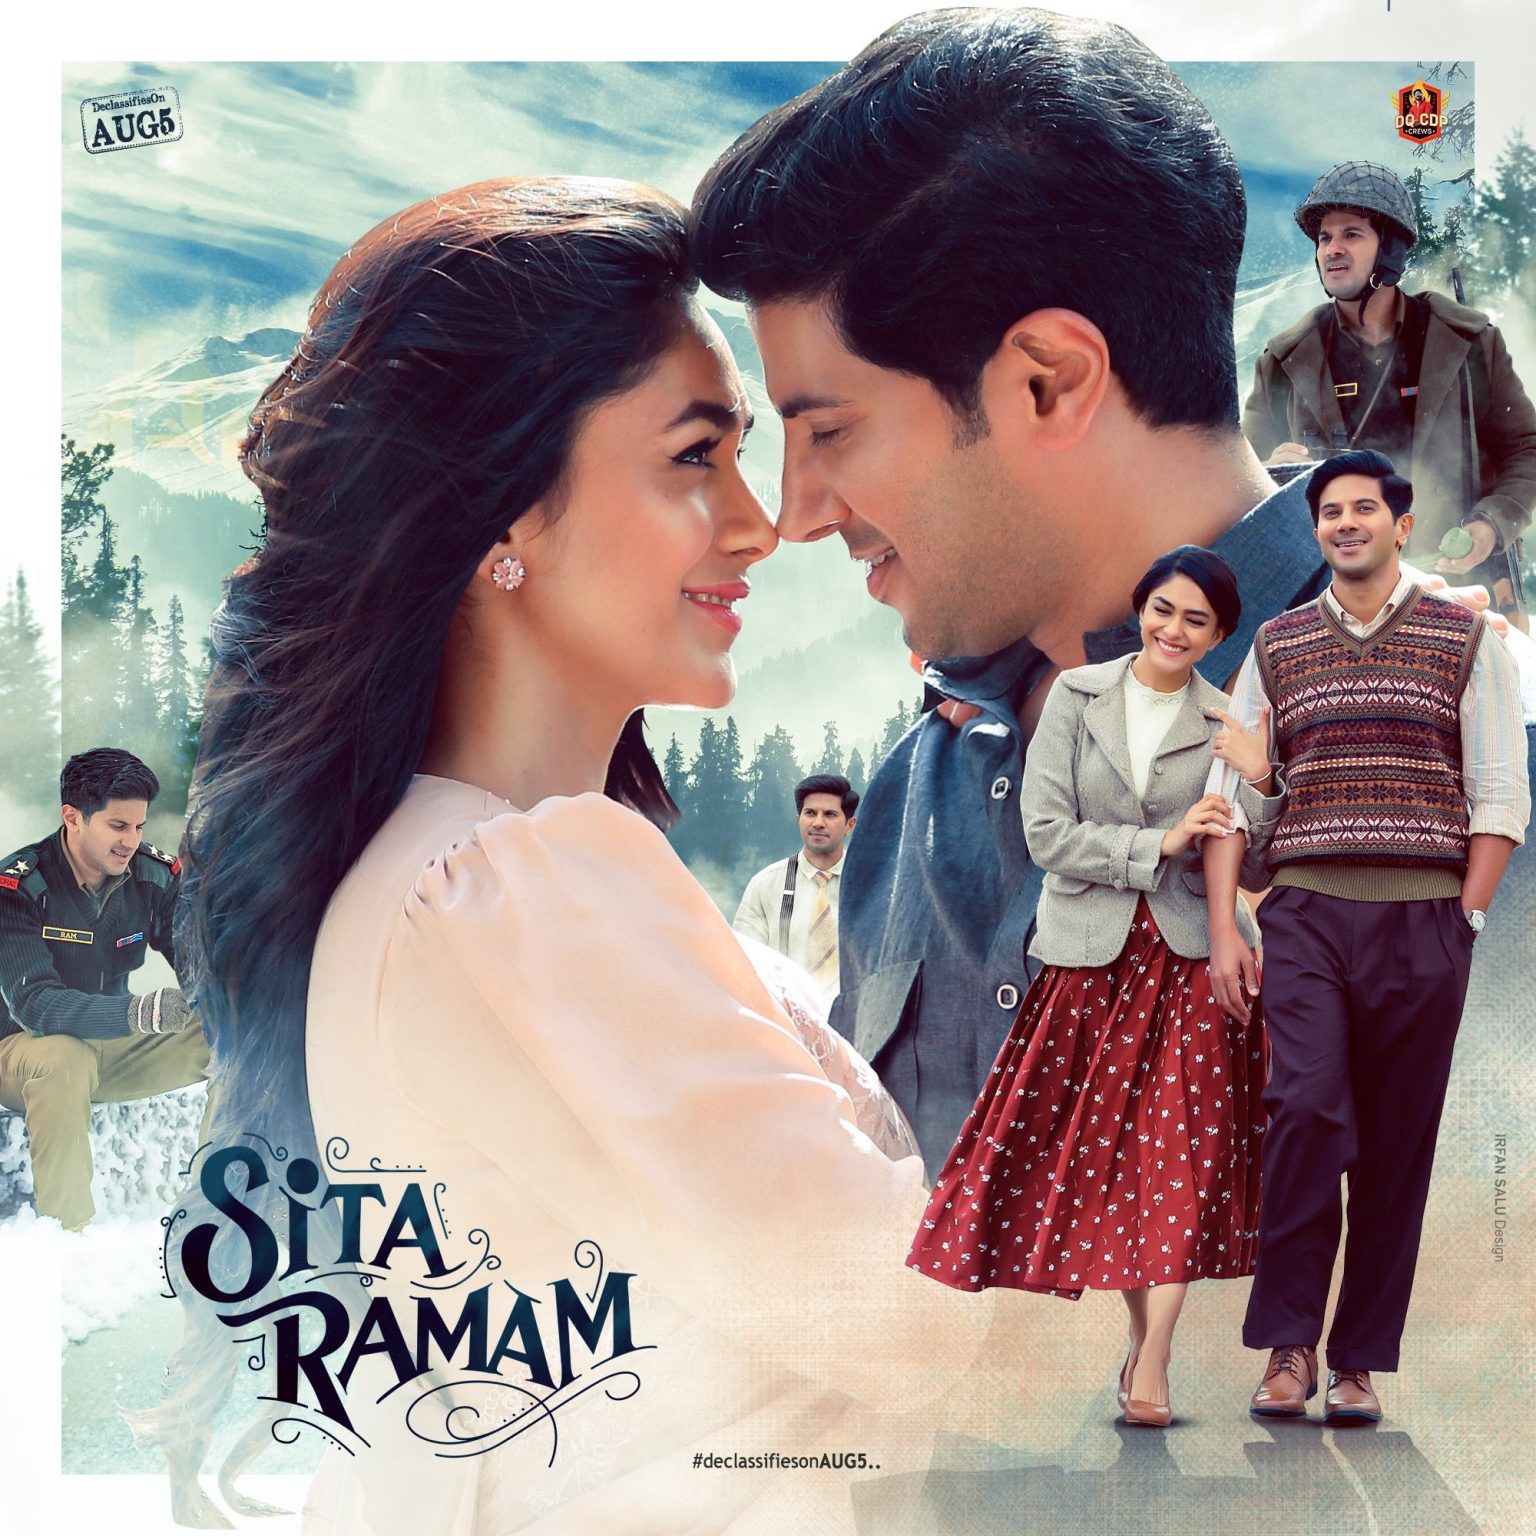 sita rama movie review in english